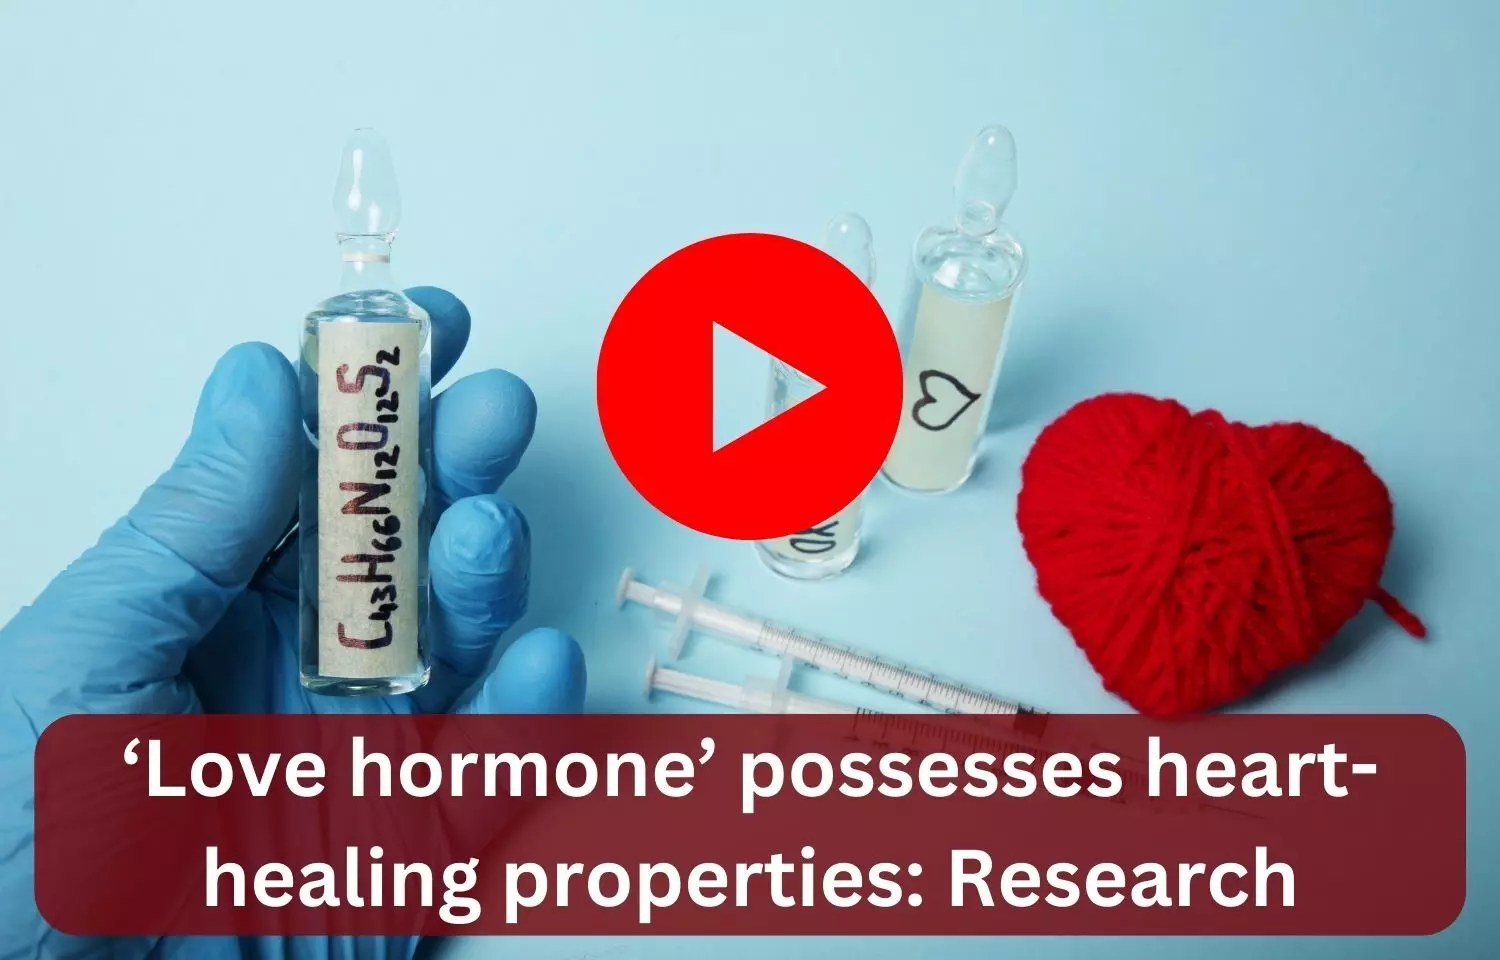 Love hormone possesses heart-healing properties: Research